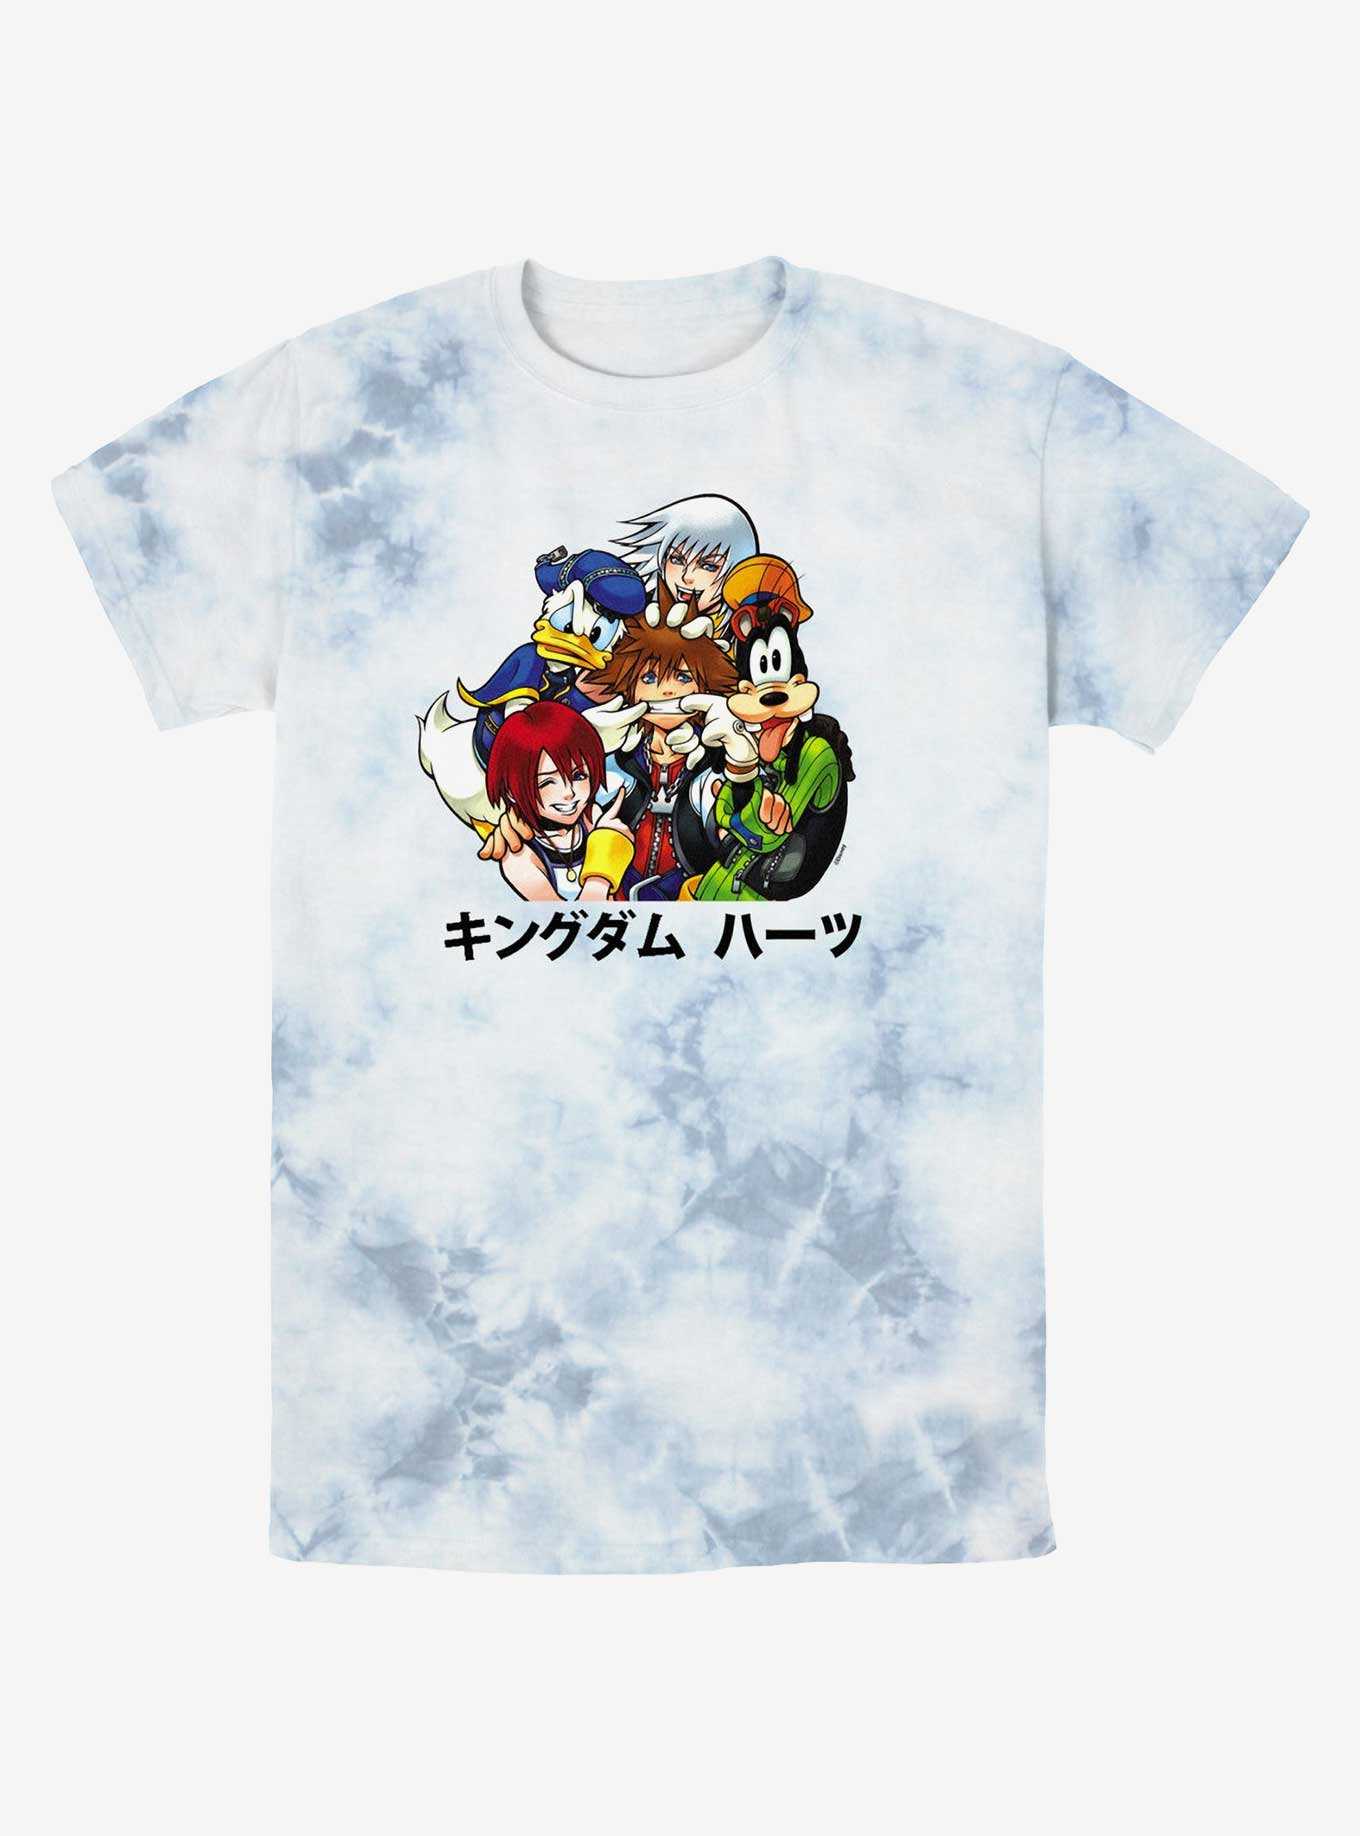 Disney Kingdom Hearts Group Stripes Tie-Dye T-Shirt, , hi-res